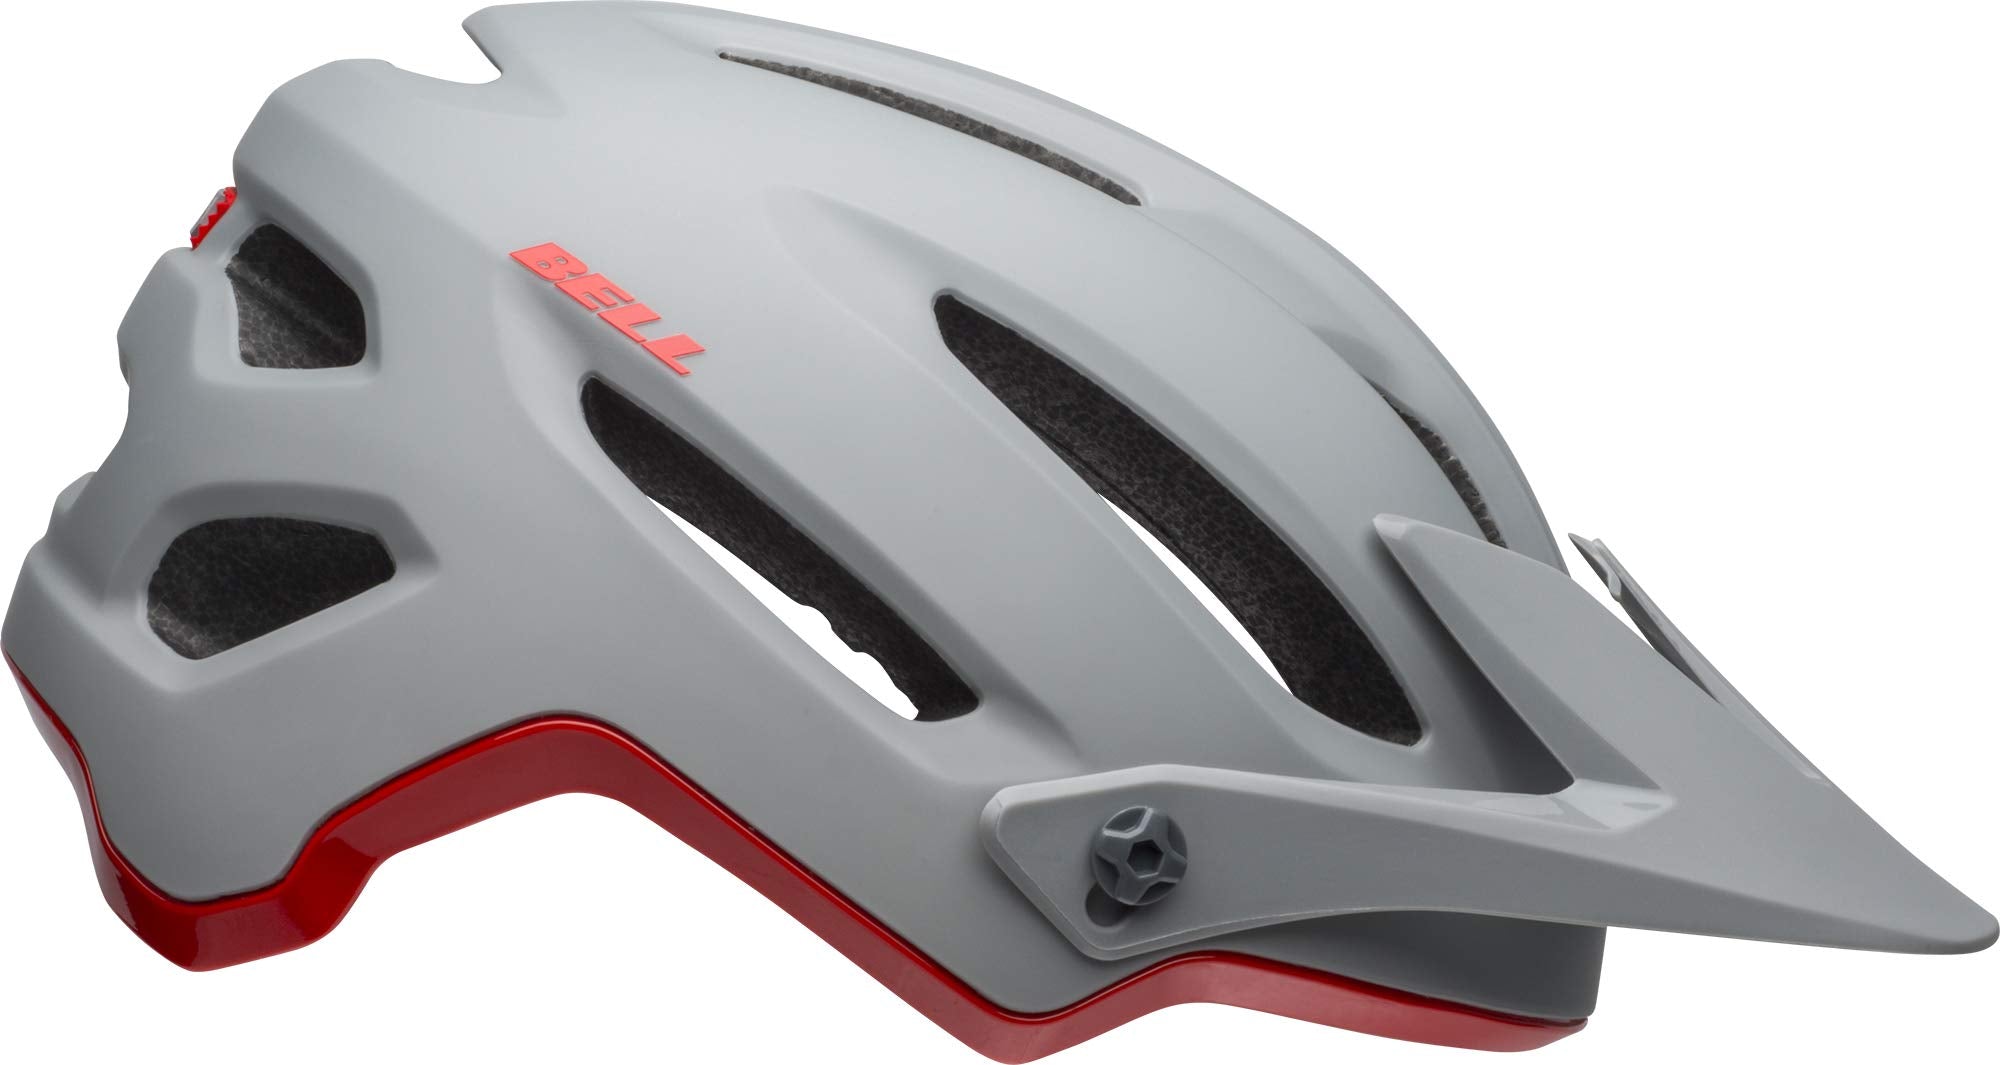 BELL 4Forty MIPS Adult Mountain Bike Helmet  - Very Good